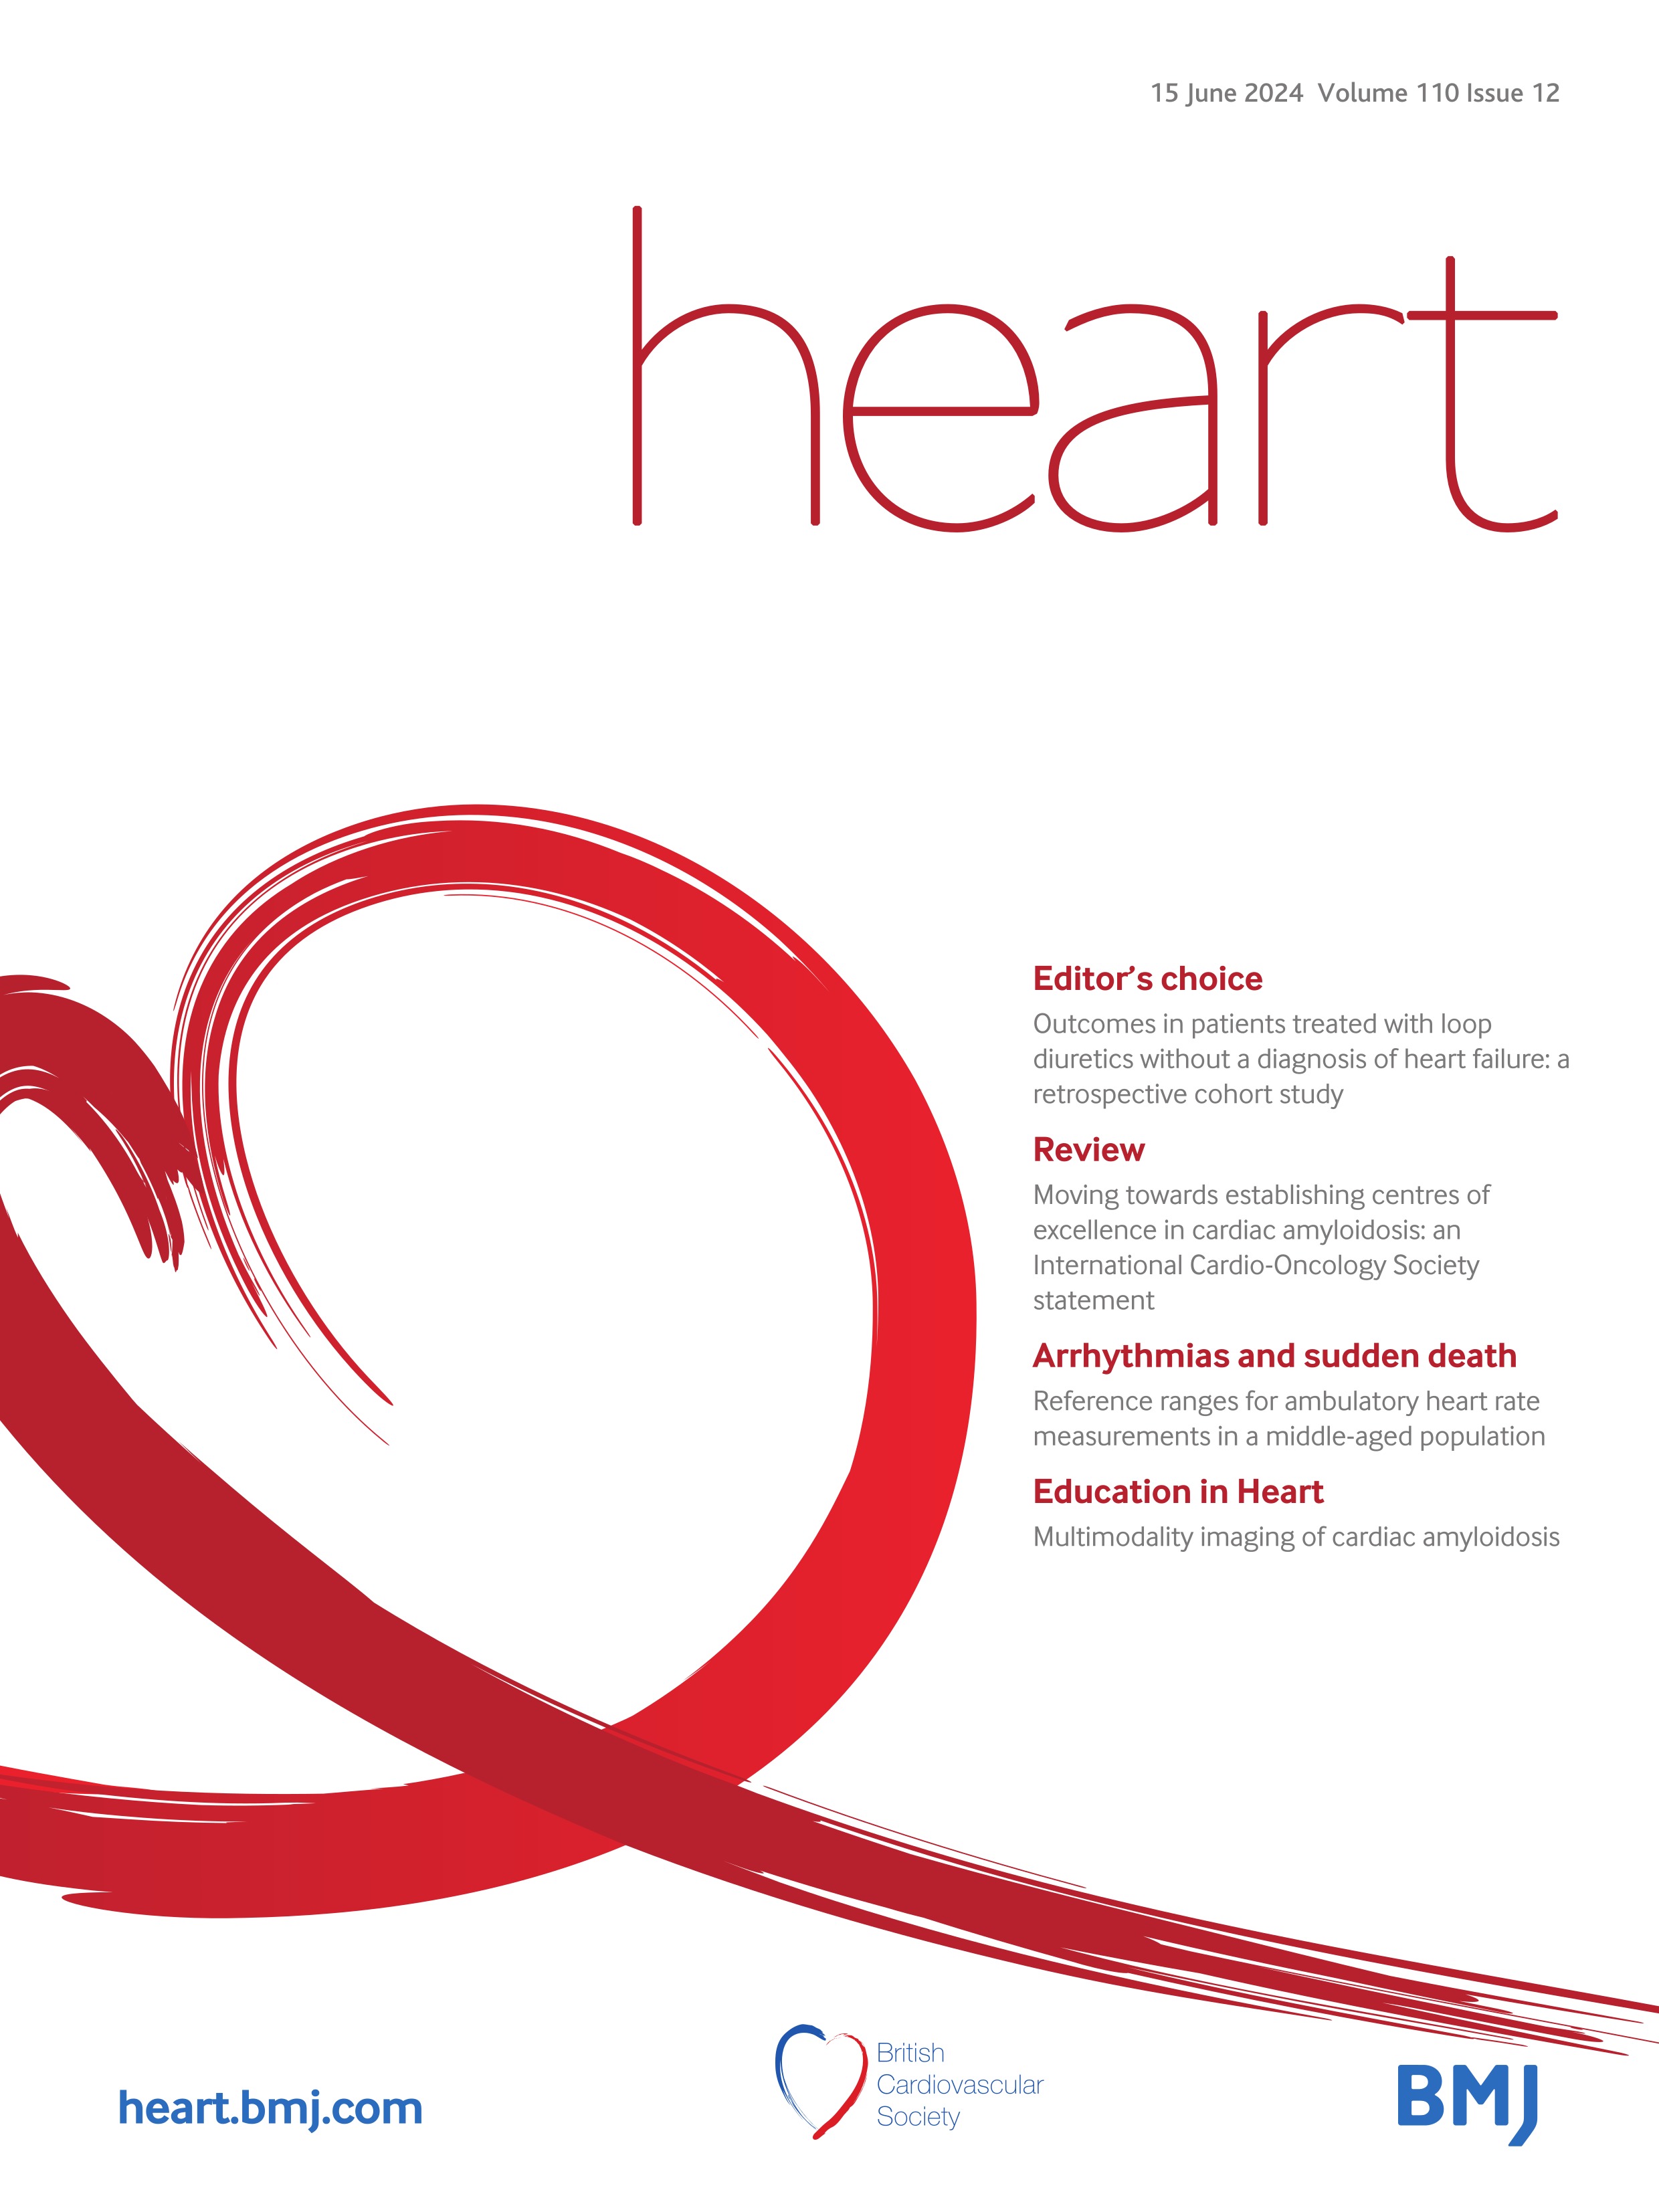 Multimodality imaging of cardiac amyloidosis